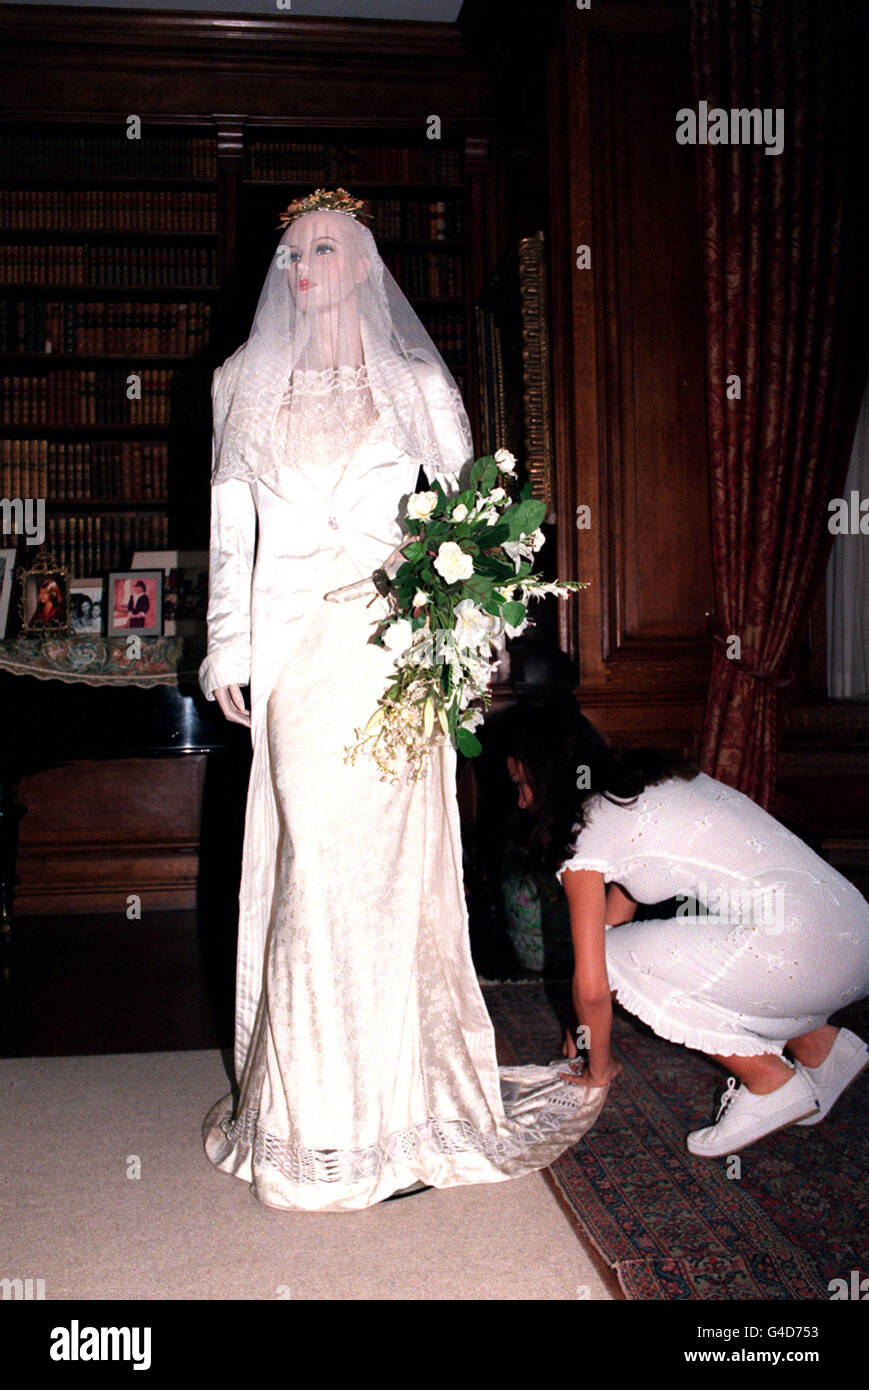 LILI DENT BROCKLEHURST WEDDING DRESS ON SHOW Stock Photo